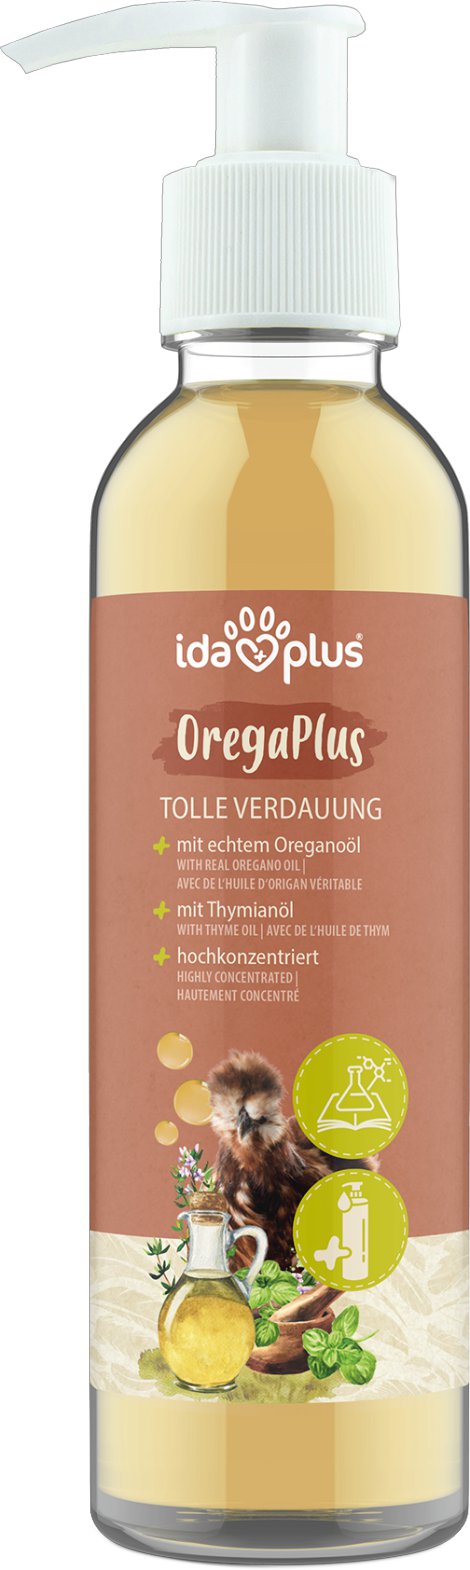 Oregaplus IdaPlus 200 ml